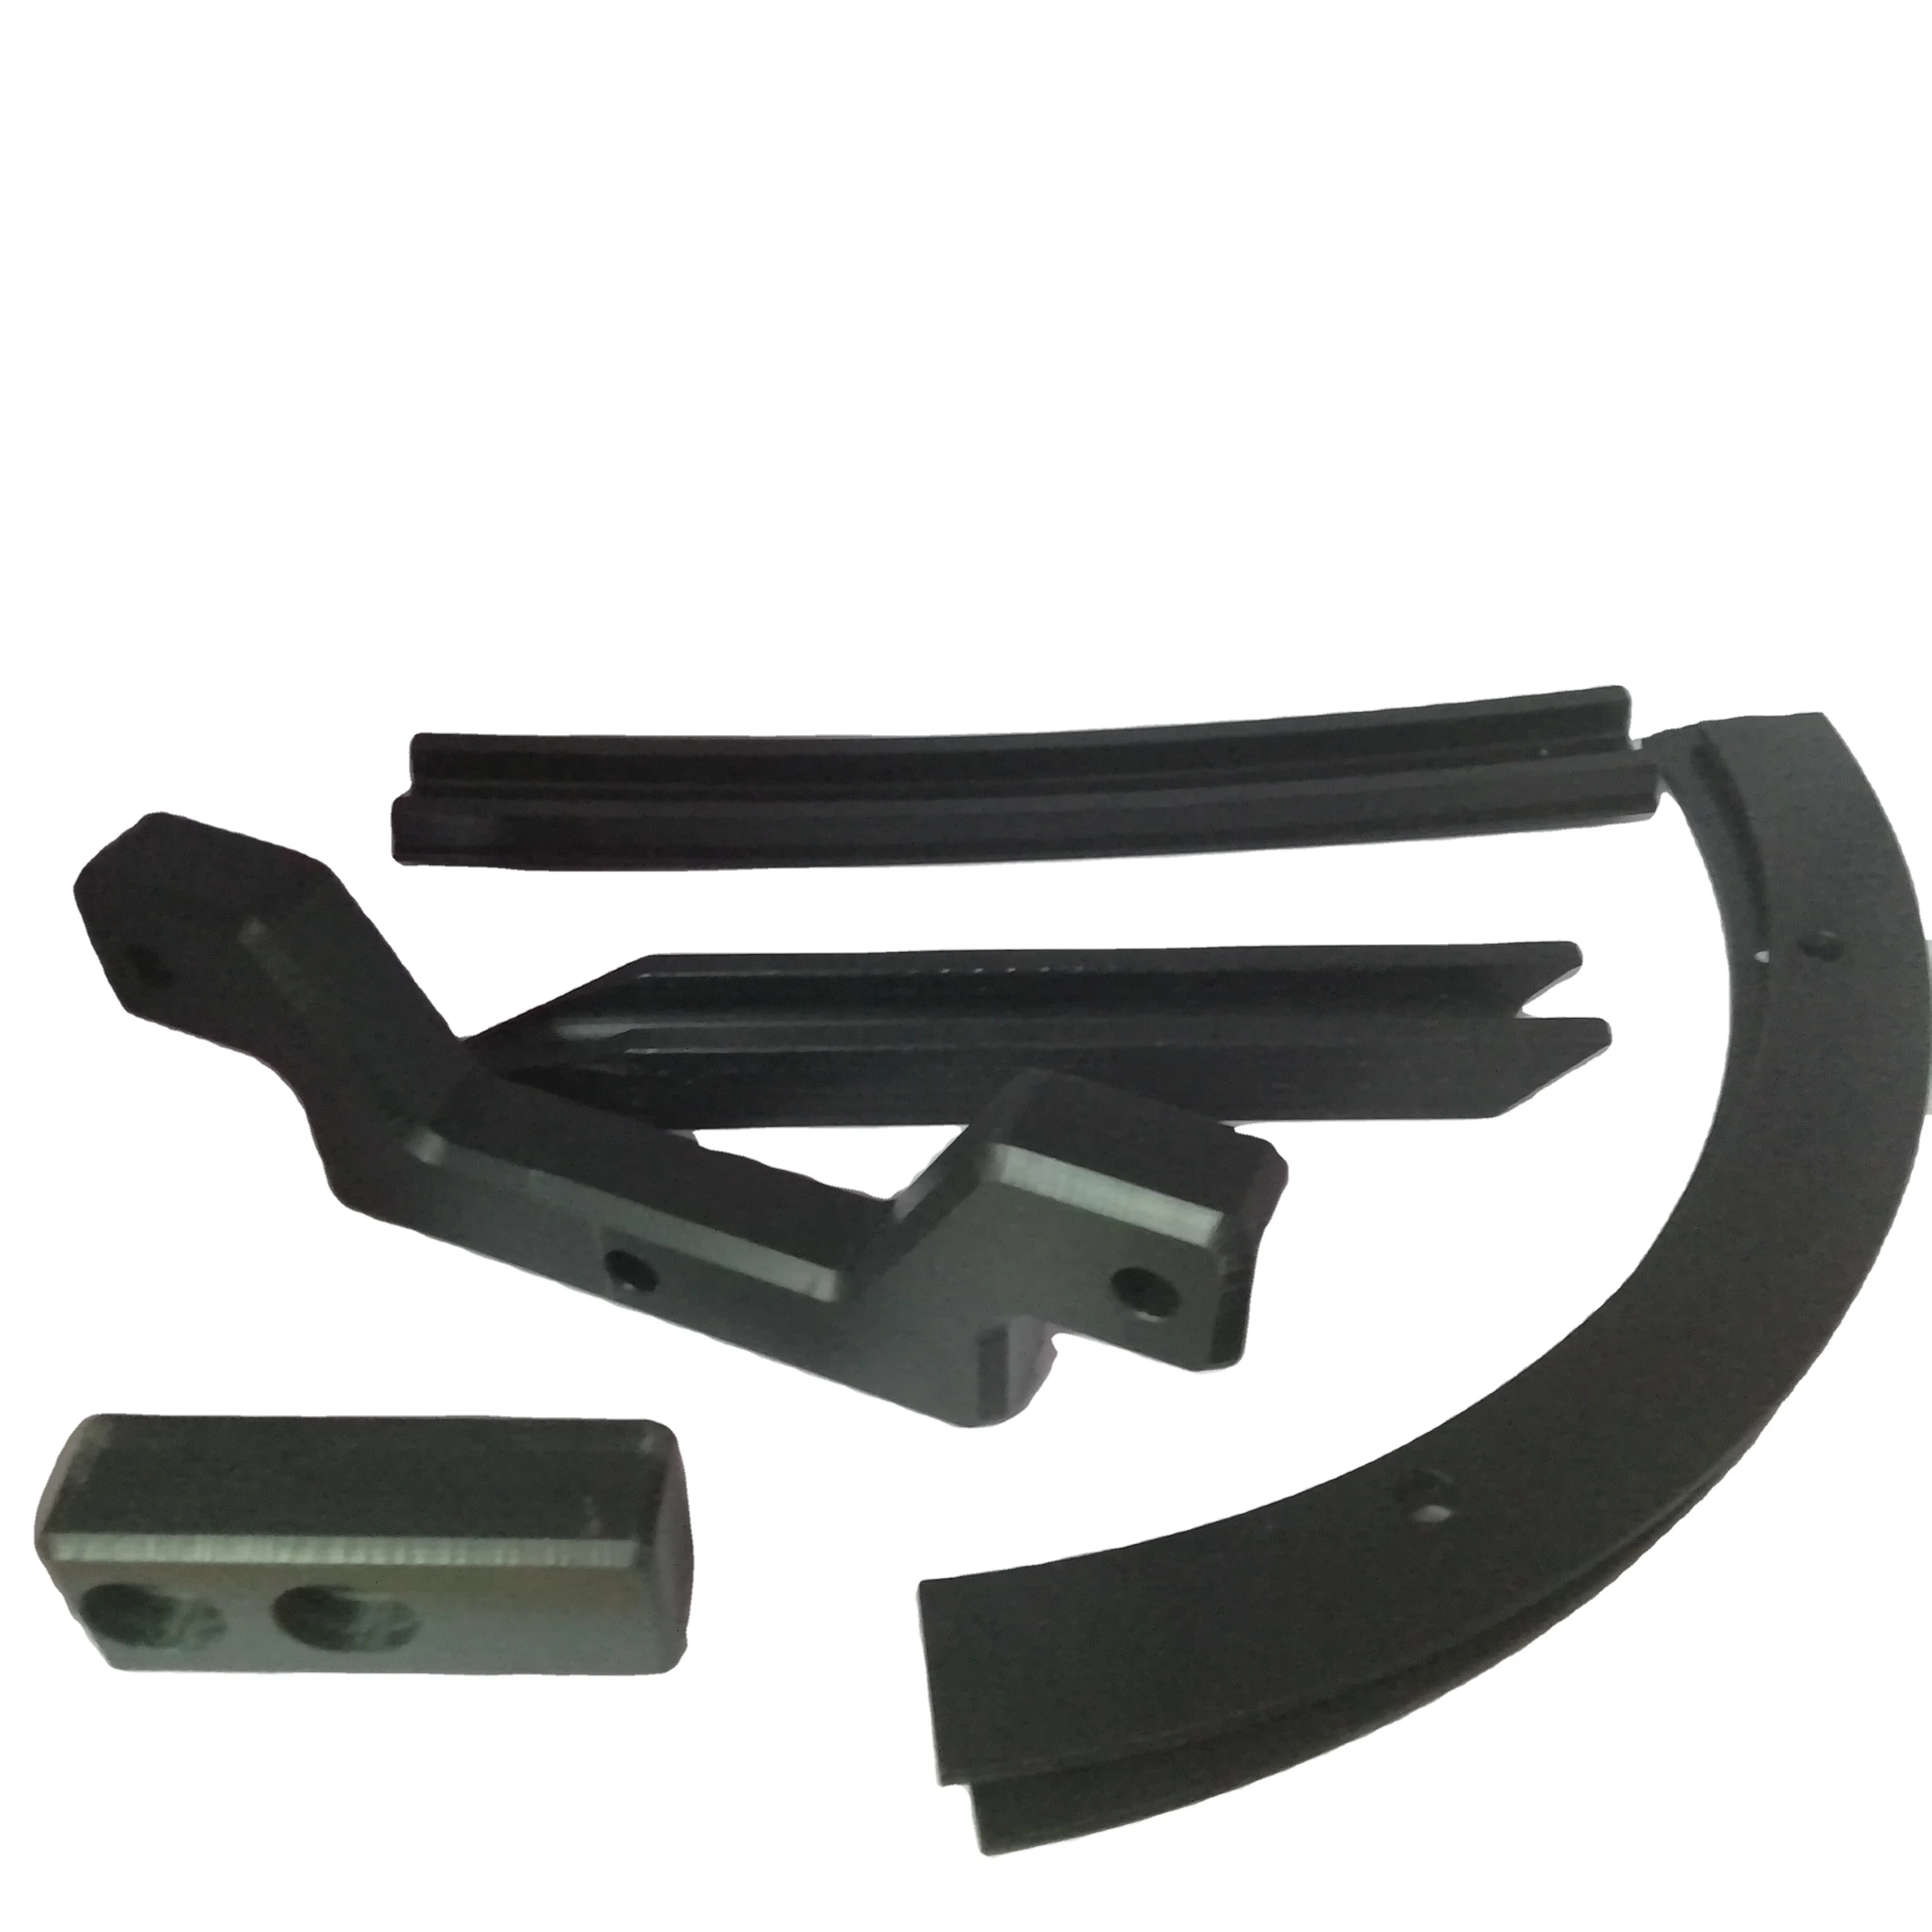 impact slide bar/ pads/ plates, UHMWPE impact bars belt conveyors, conveyor idler pads